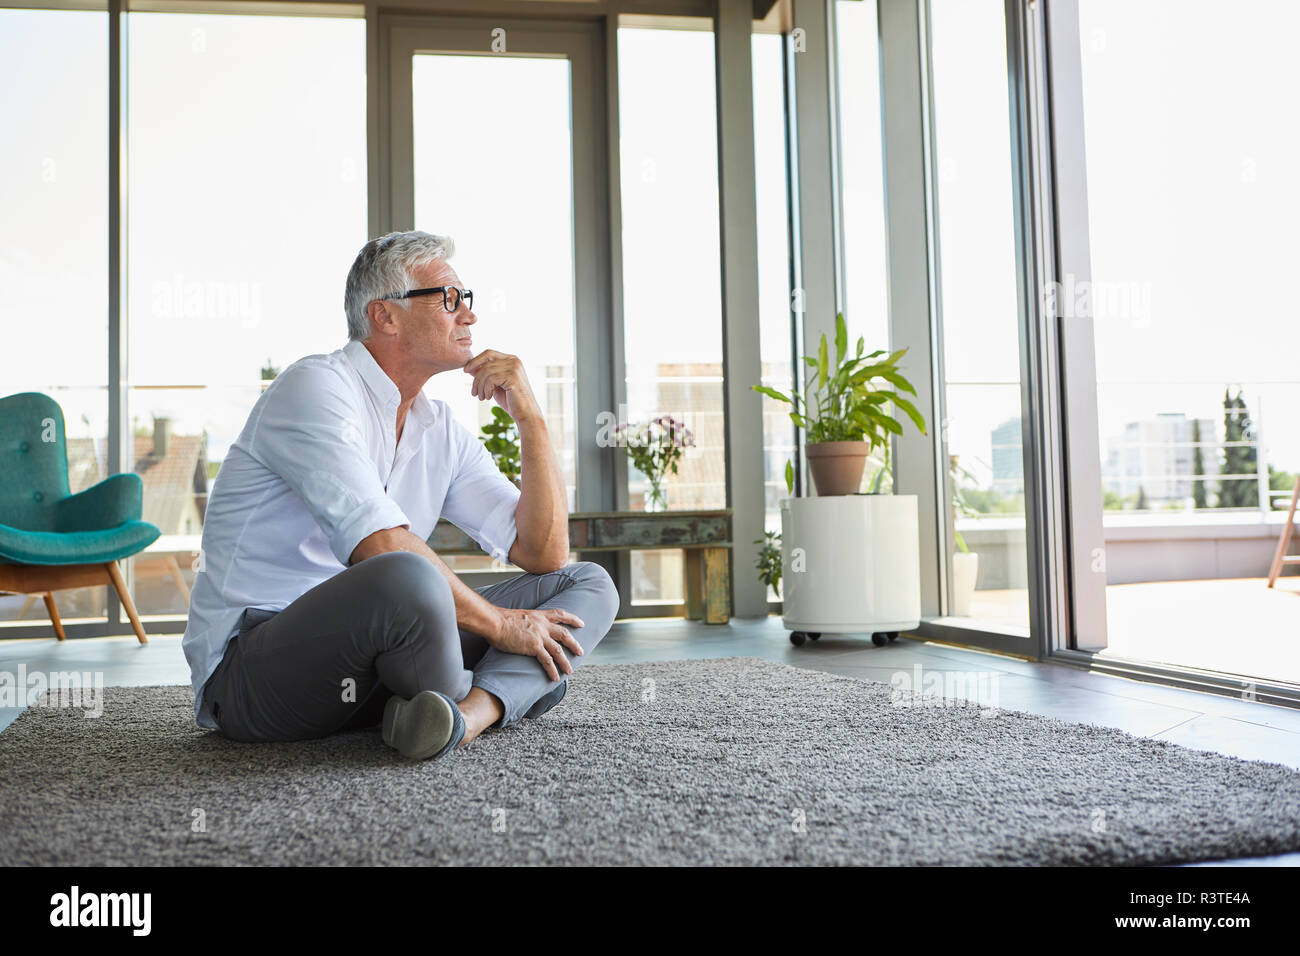 Pensive mature man sitting on carpet at home Stock Photo